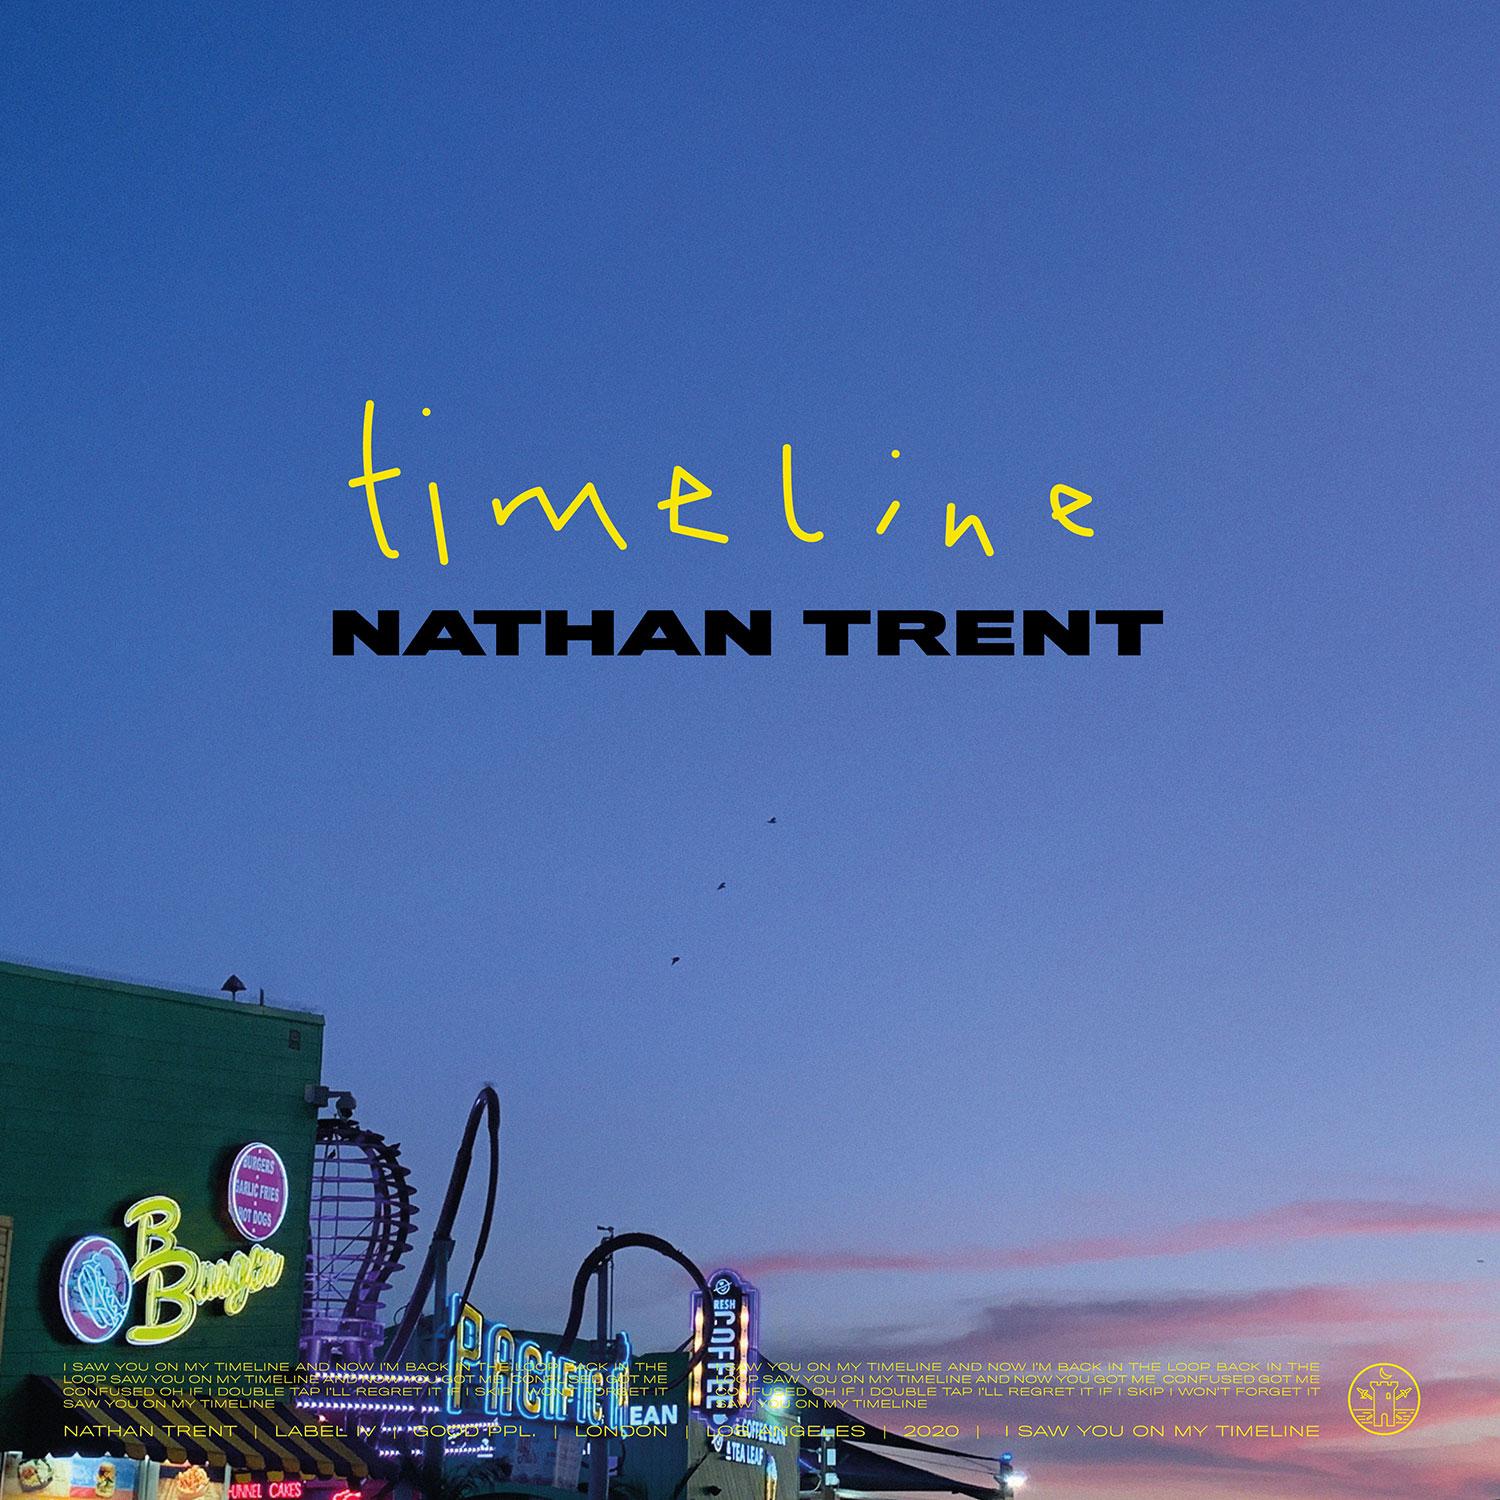 Nathan Trent - Timeline